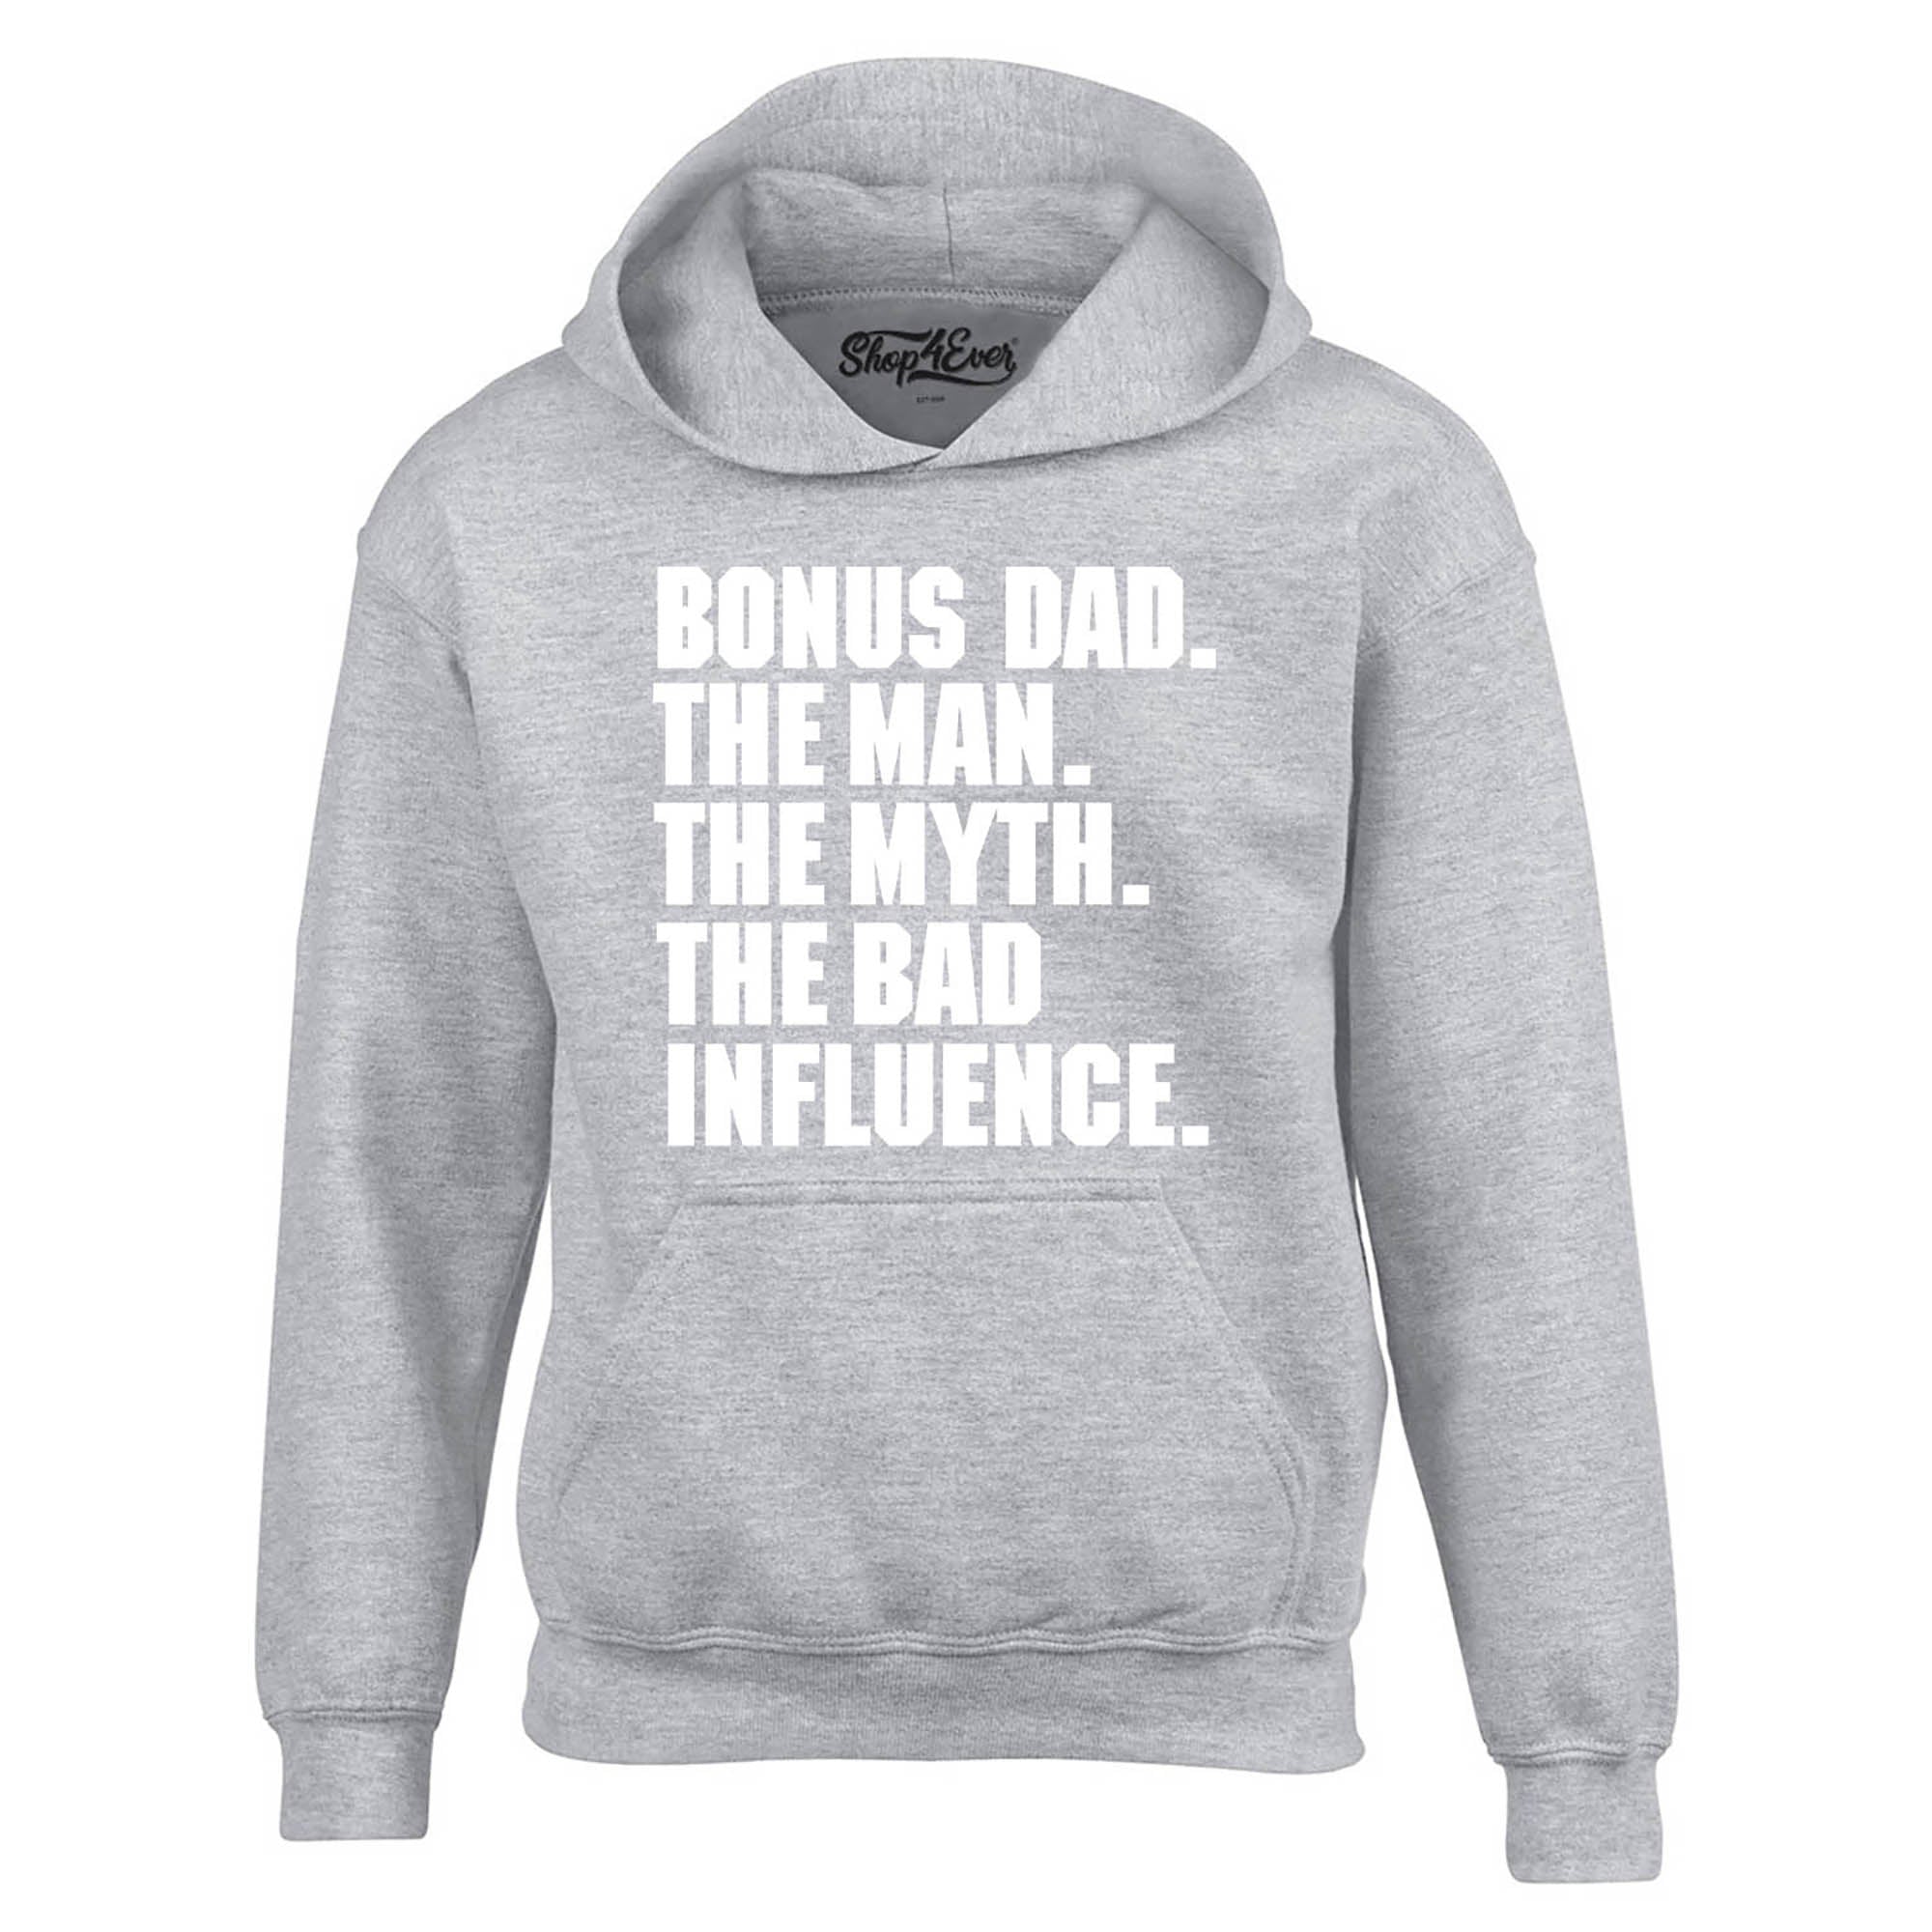 Bonus Dad The Man The Myth The Bad Influence Hoodie Sweatshirts